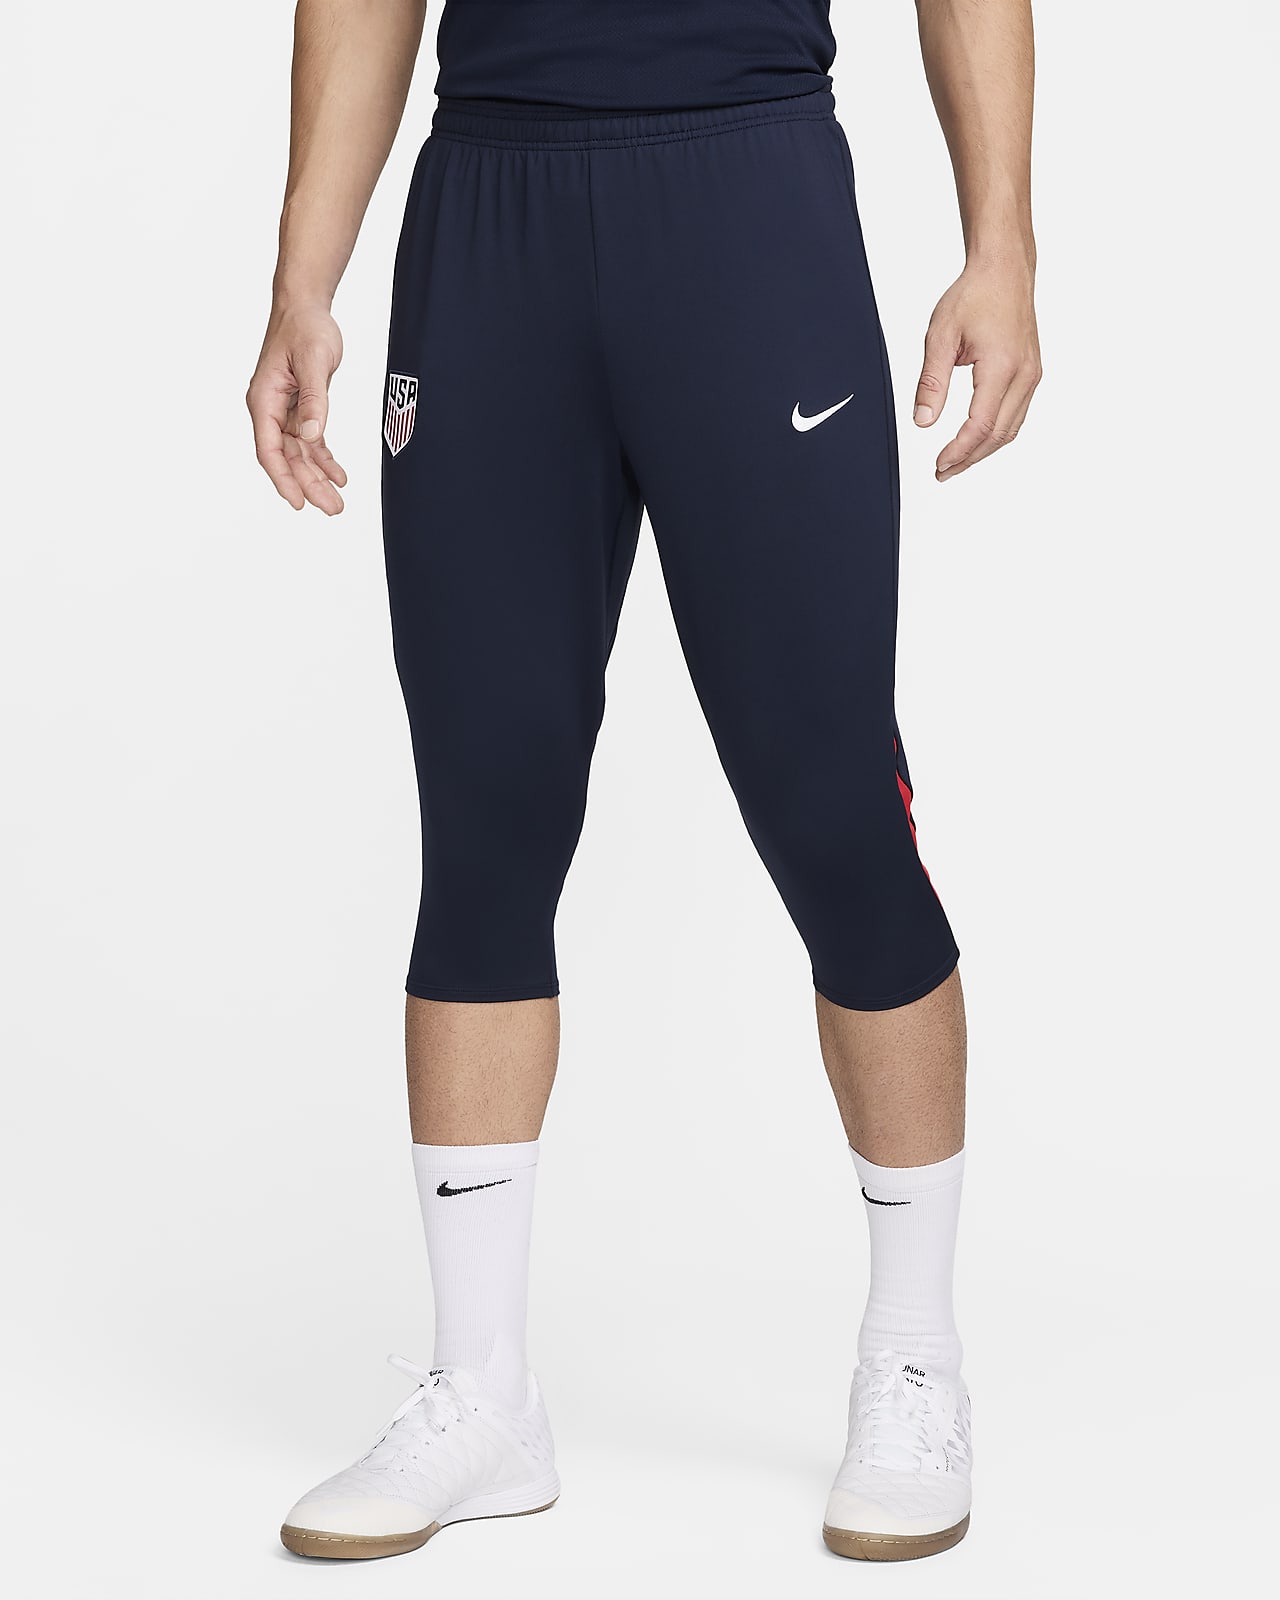 USMNT Strike Men's Nike Dri-FIT Soccer 3/4 Pants